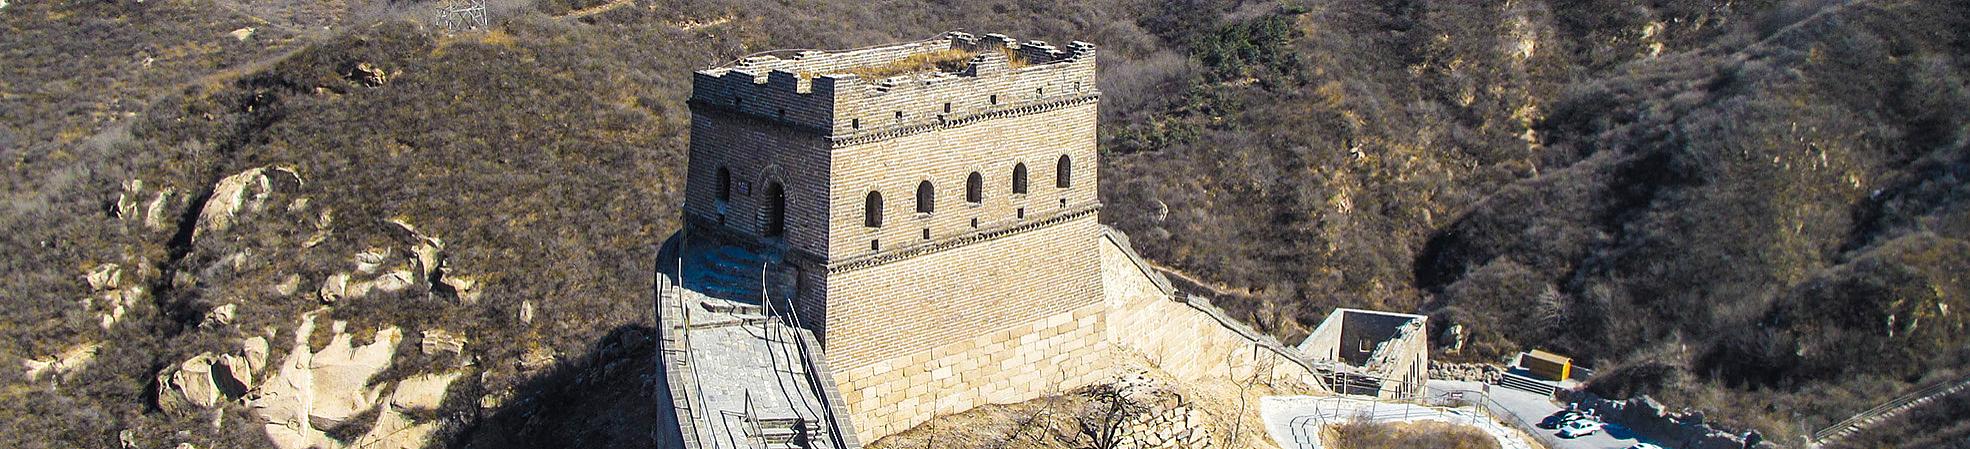 Badaling Great Wall & Badaling Remnant Great Wall's Information and Tips